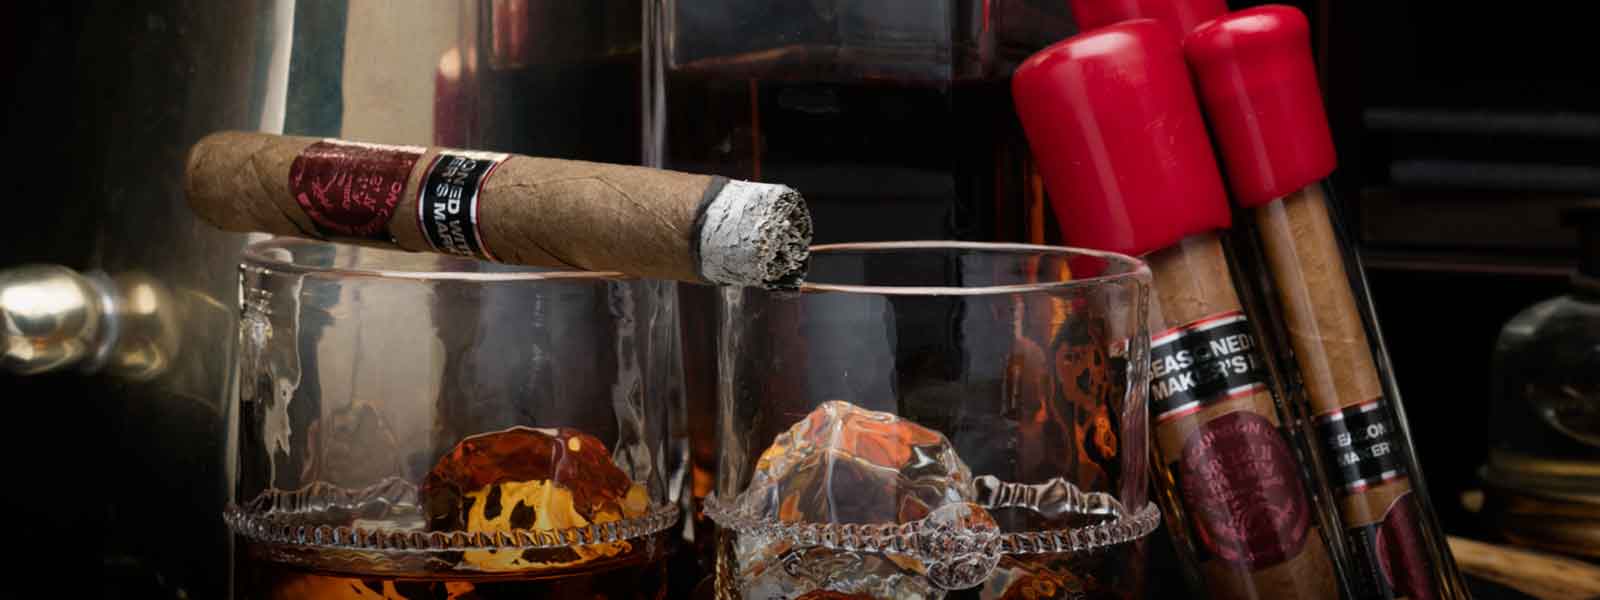 Bourbon Cigar Header Image